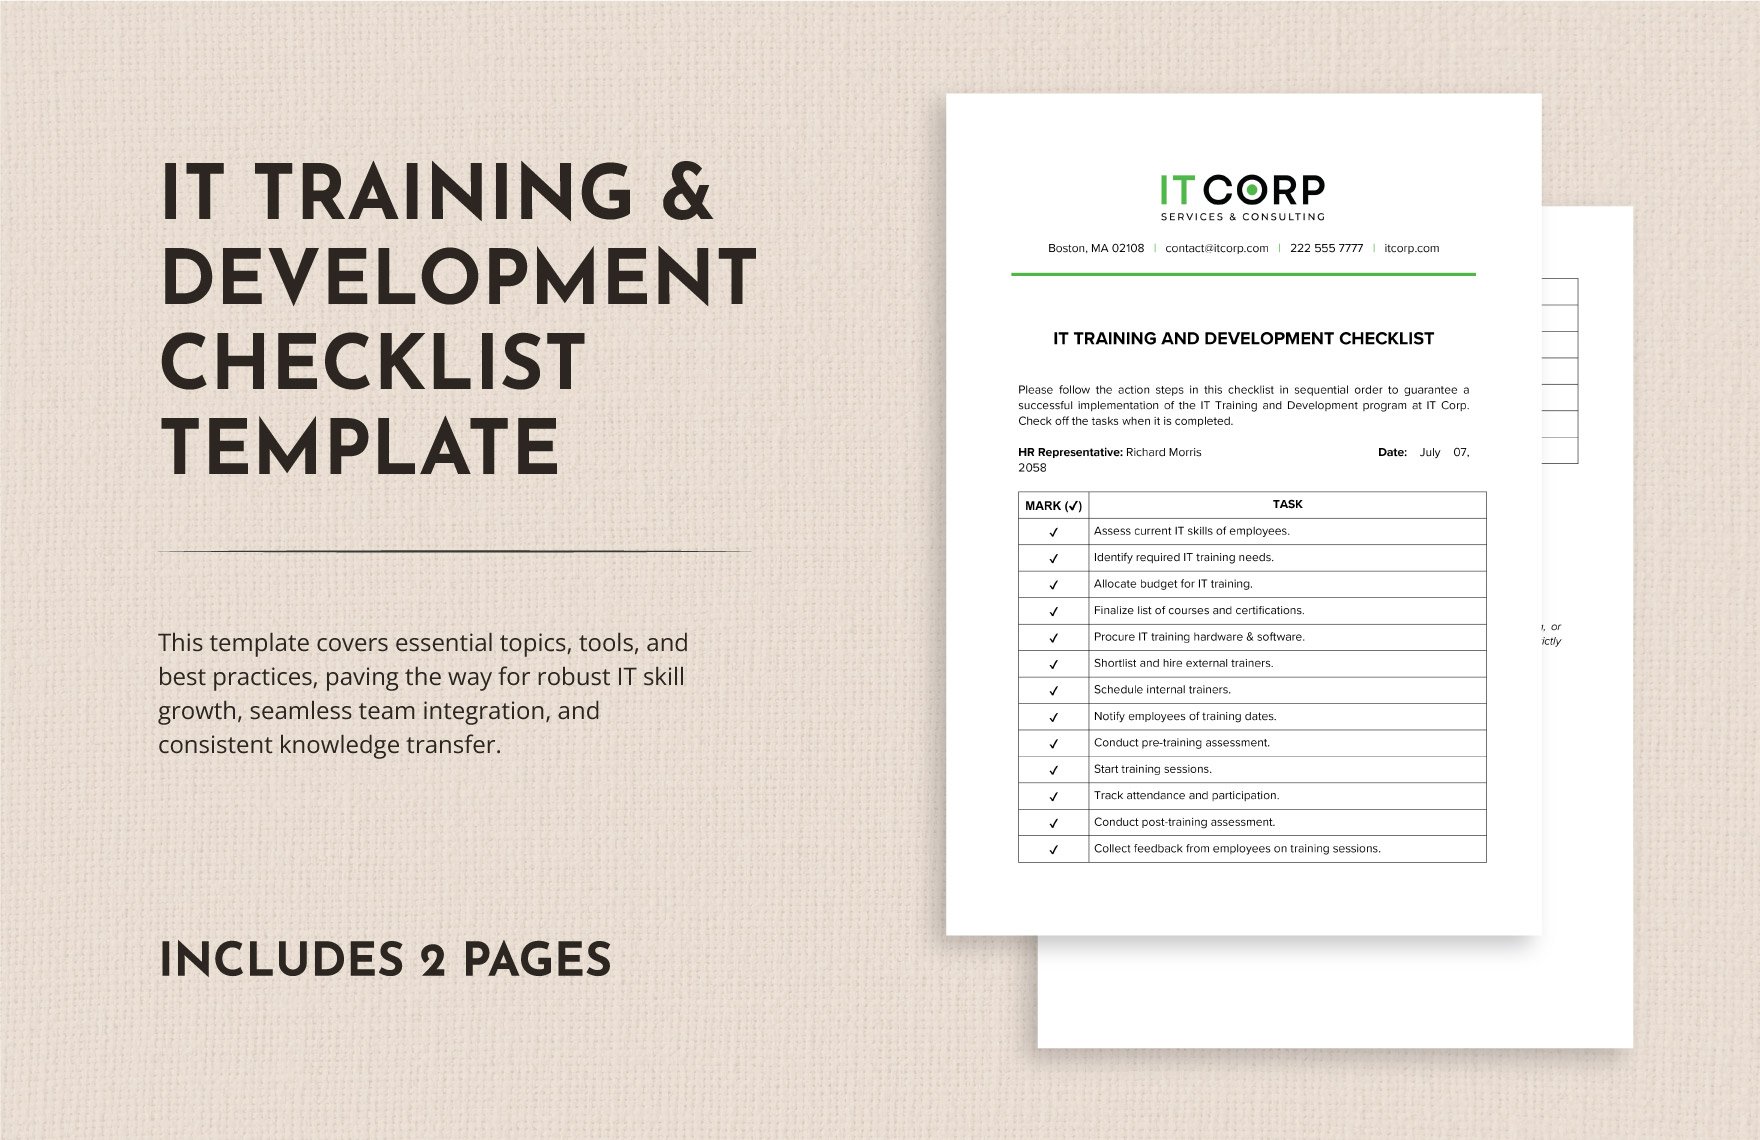 IT Training & Development Checklist Template